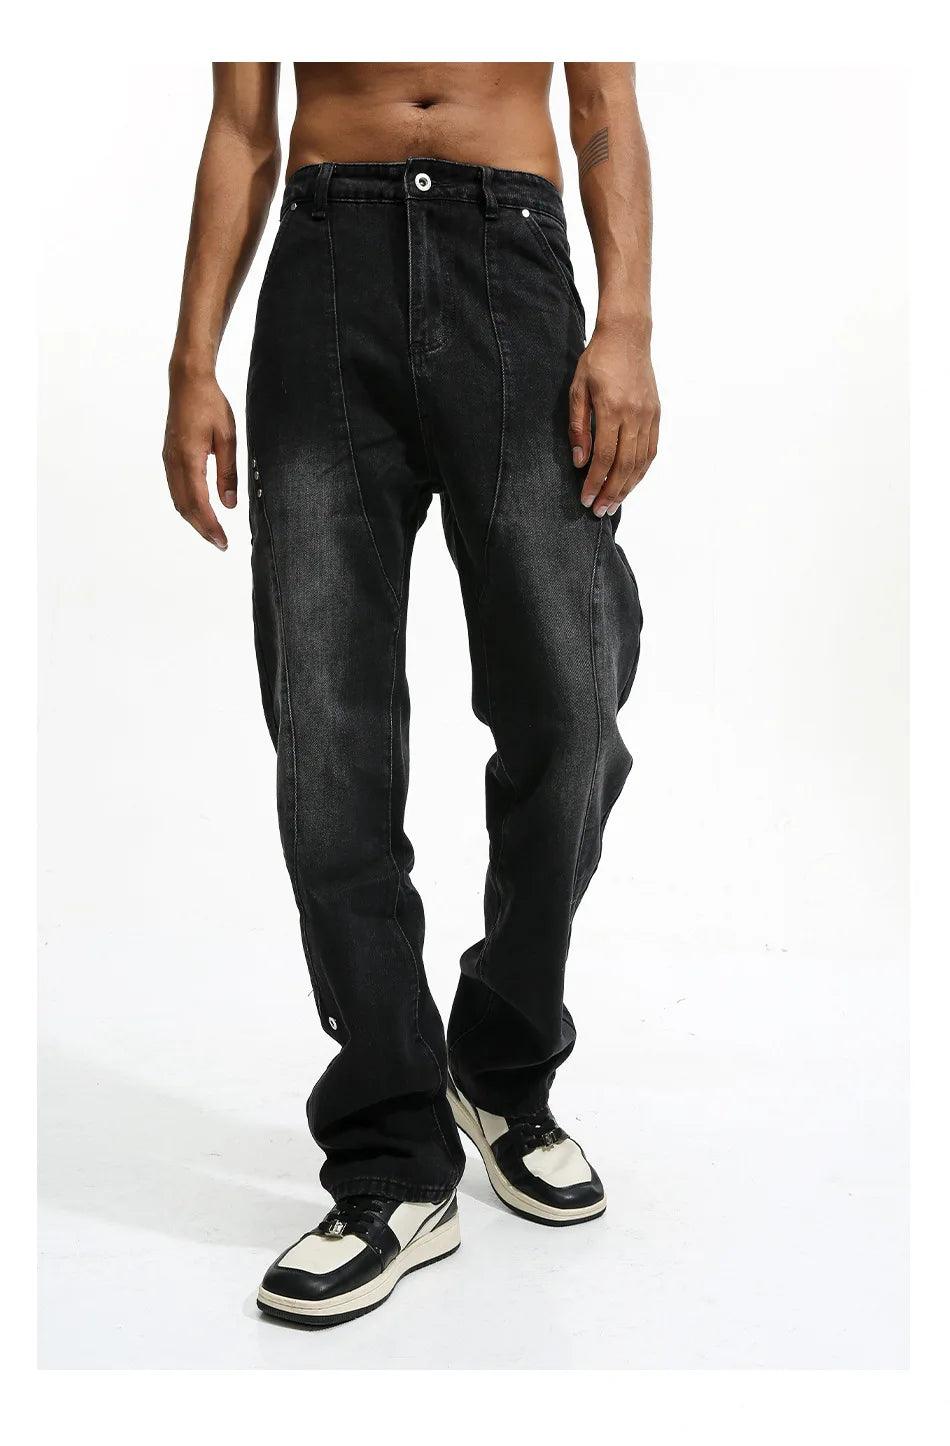 Black Rivet Jeans